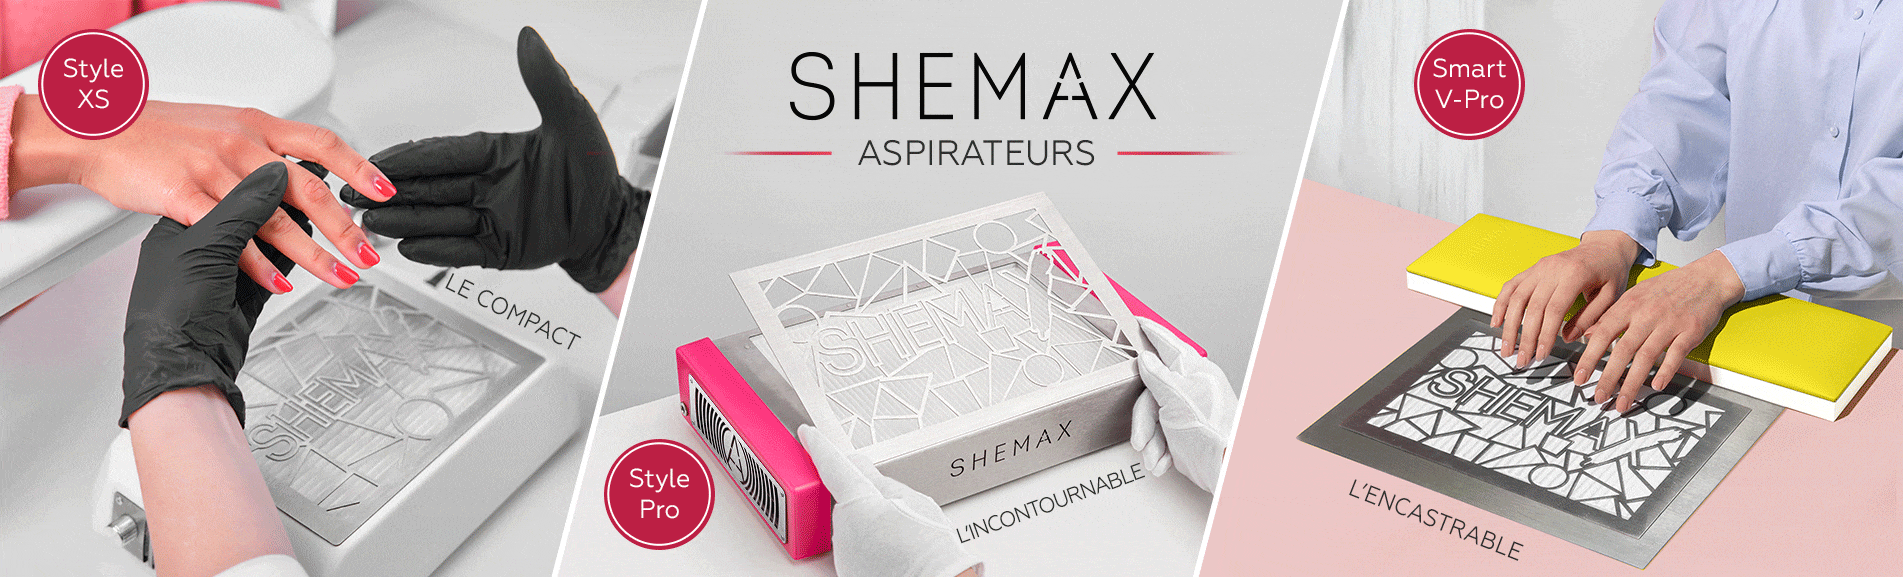 slide aspirateurs shemax fraise nail shop